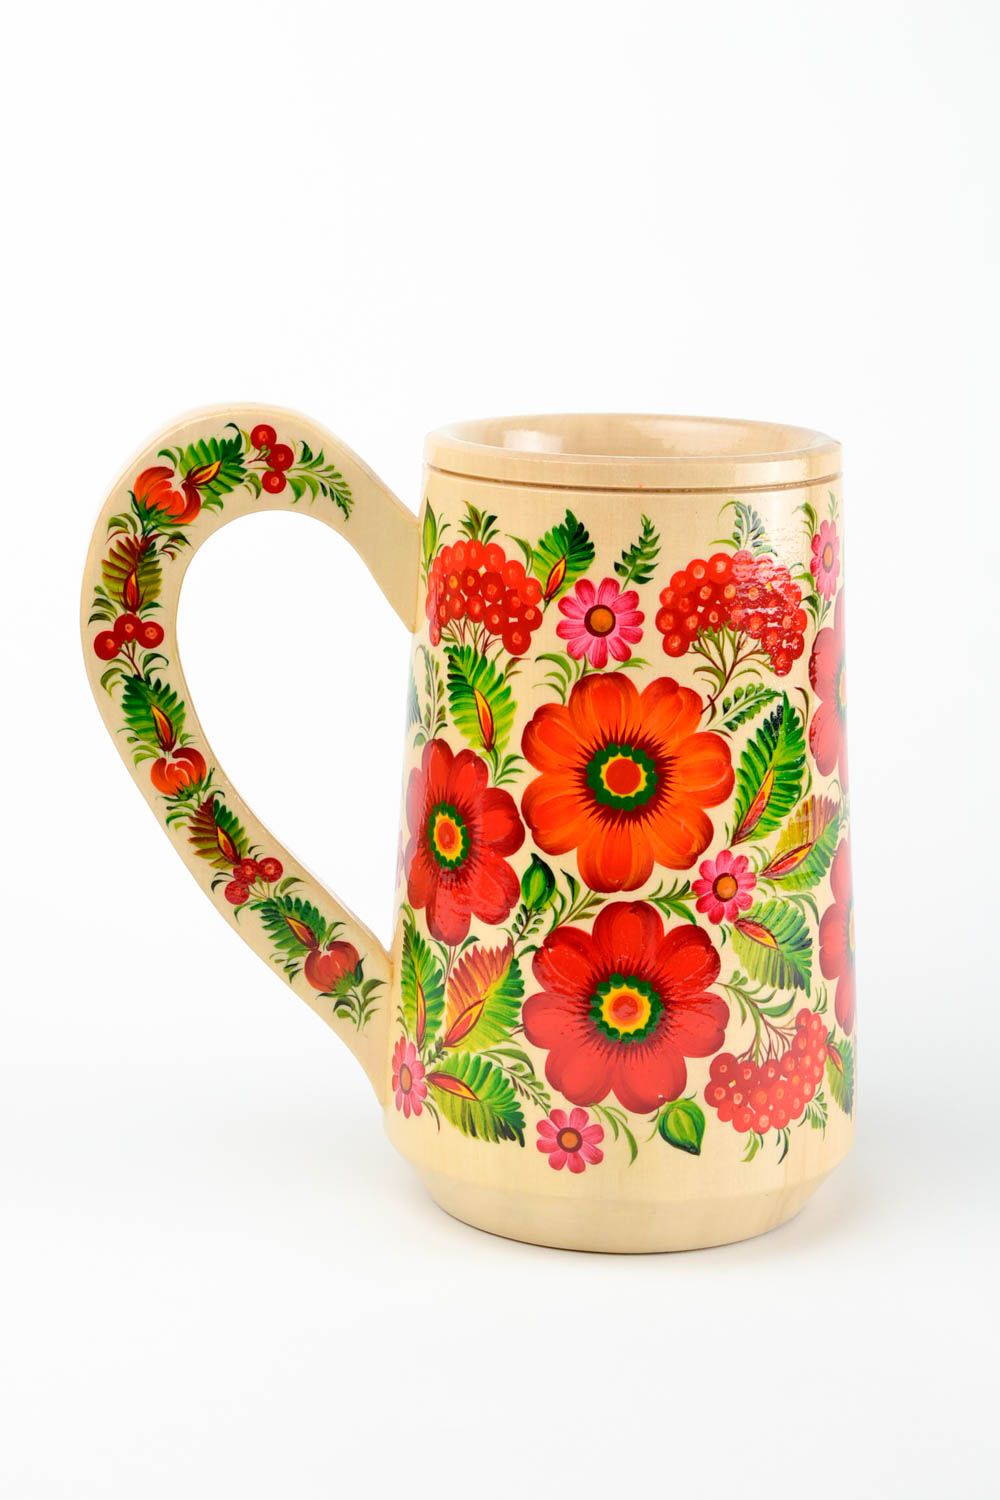 Handmade wooden mug designer glass unusual cup for kitchen decor gift ideas photo 4